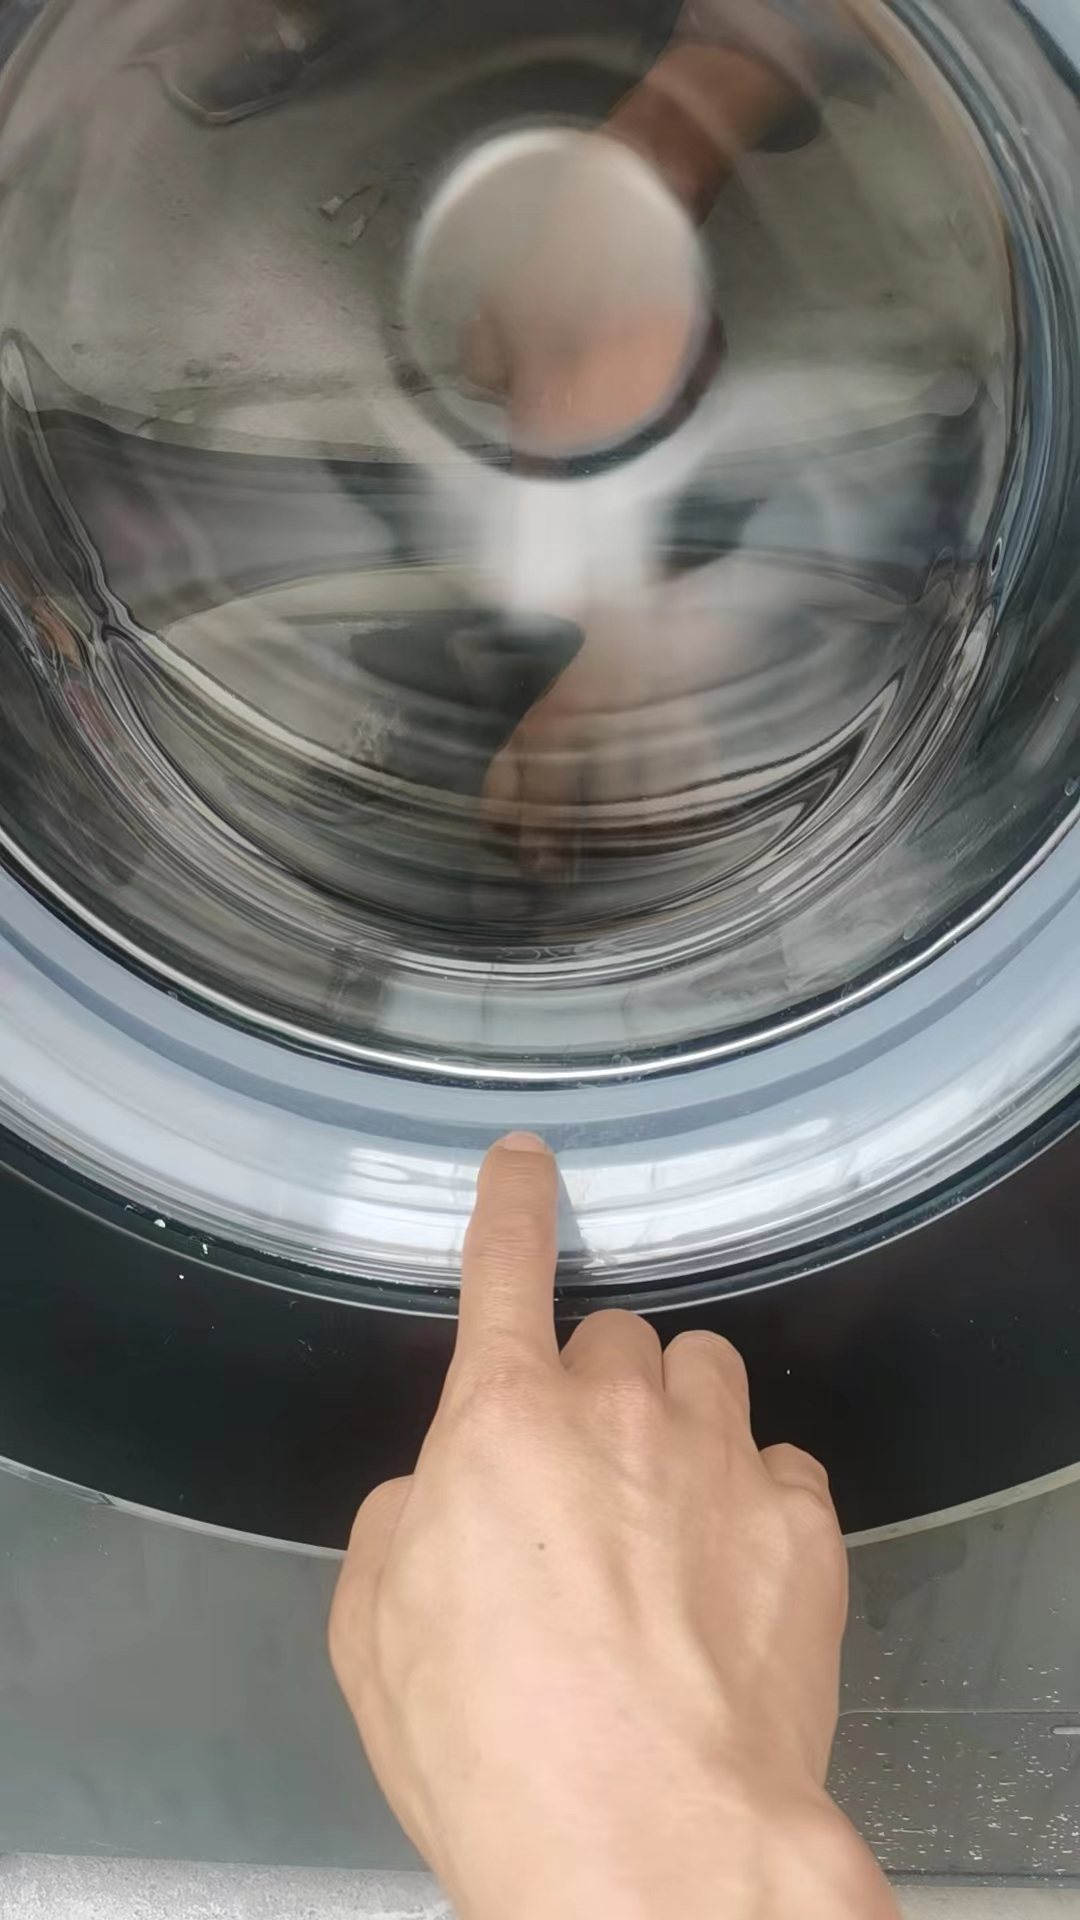 TCL 8公斤全自动变频滚筒洗衣机 热力除菌 中途添衣 1.06洗净比 超薄嵌入式家用洗衣机G80L130-B(极地蓝)晒单图